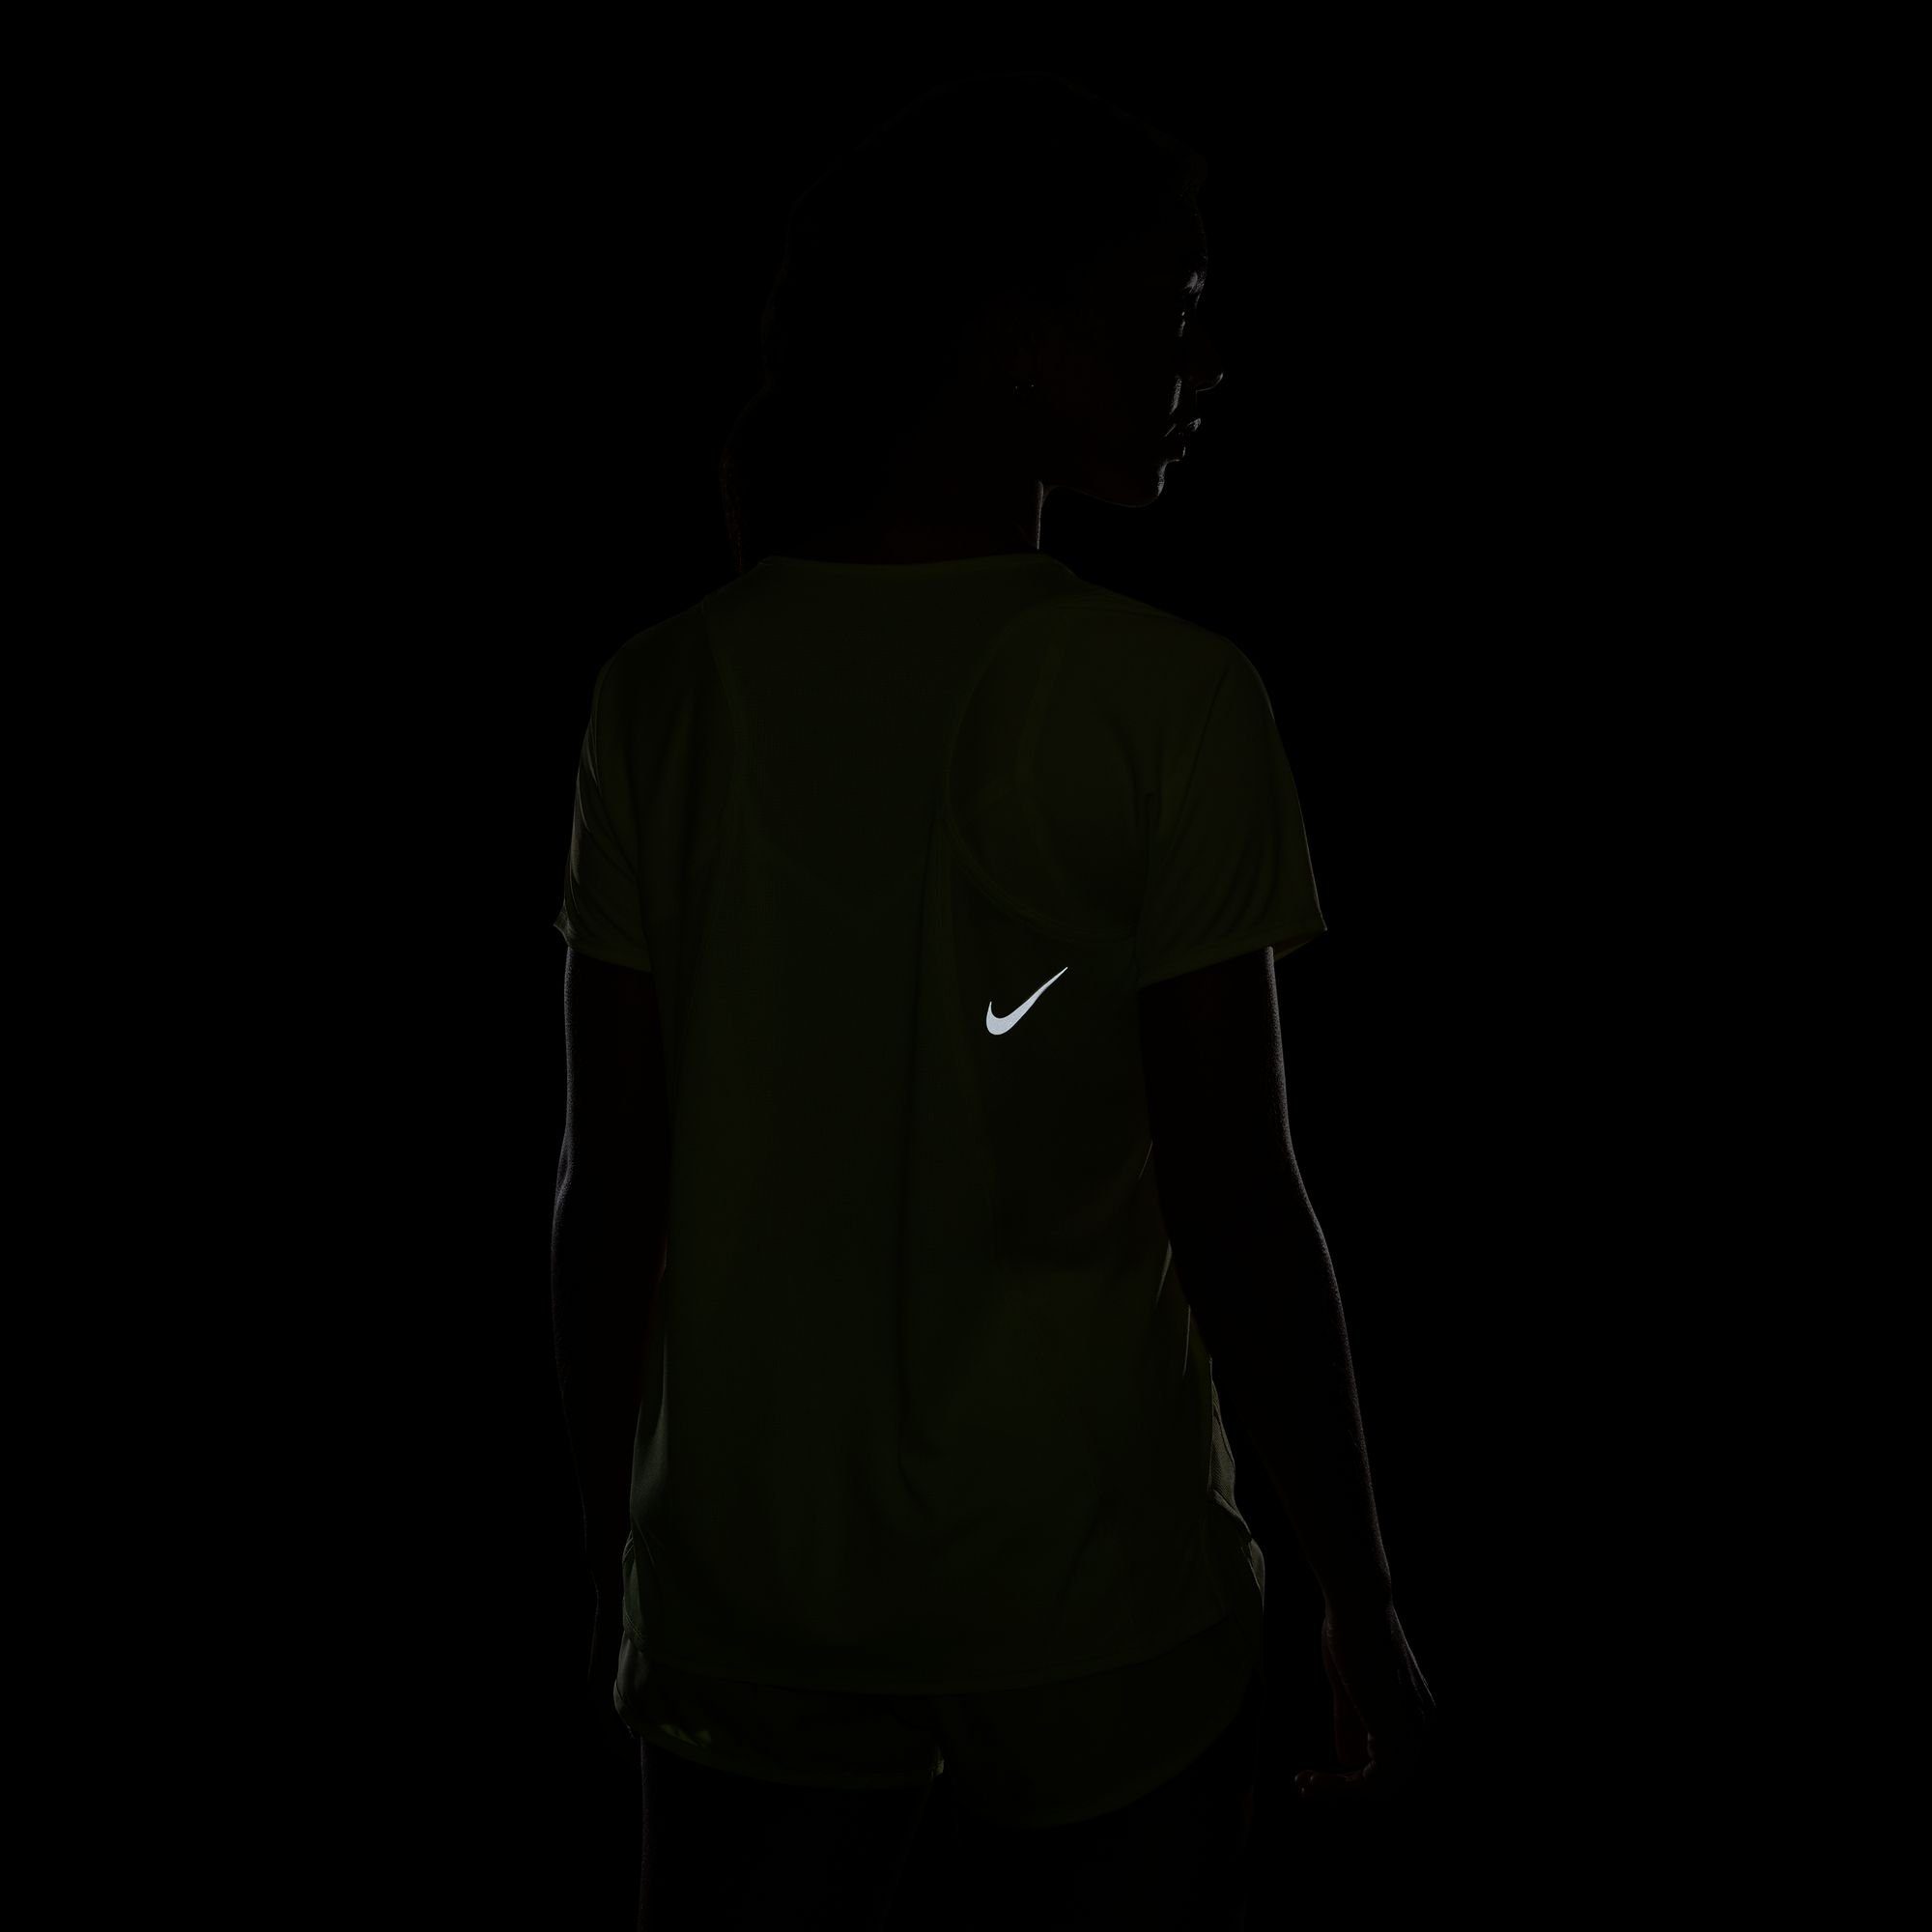 Nike Laufshirt TWIST/REFLECTIVE SILV DRI-FIT RUNNING LEMON SHORT-SLEEVE WOMEN'S LT RACE TOP